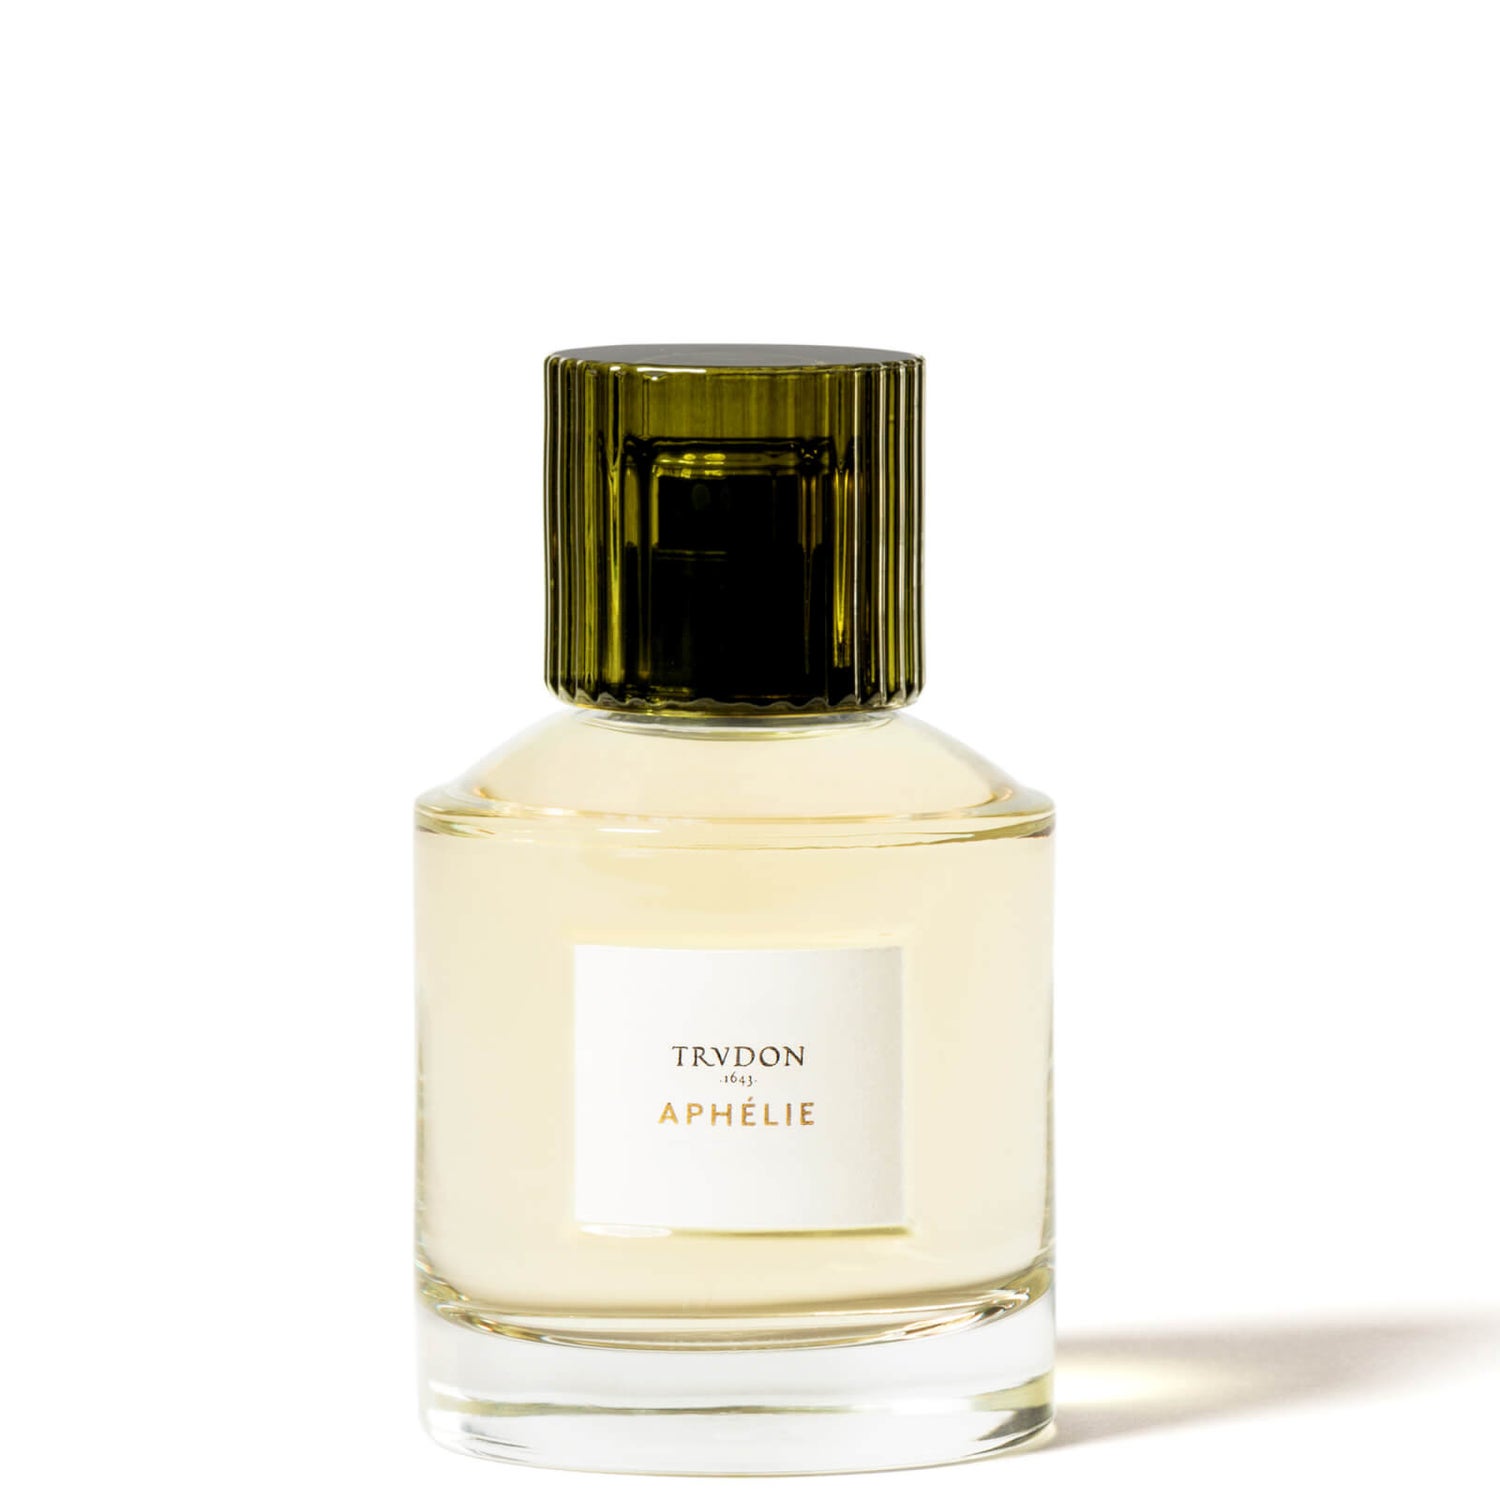 TRUDON Aphélie Perfume 100ml - Dermstore